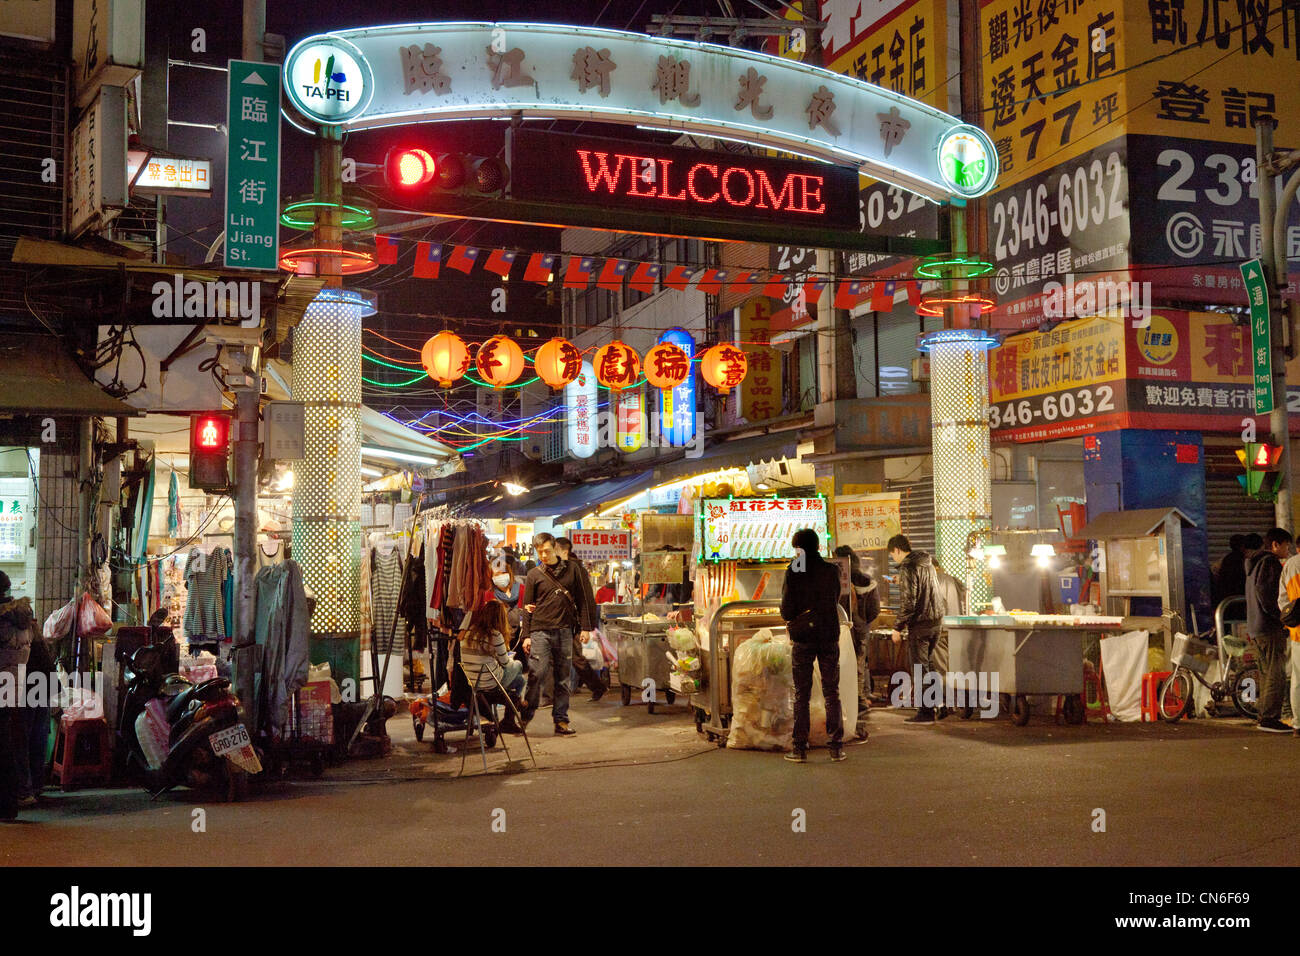 Entrance to Linjiang Street (Tonghua) Night Market Taipei Taiwan. JMH5751 Stock Photo